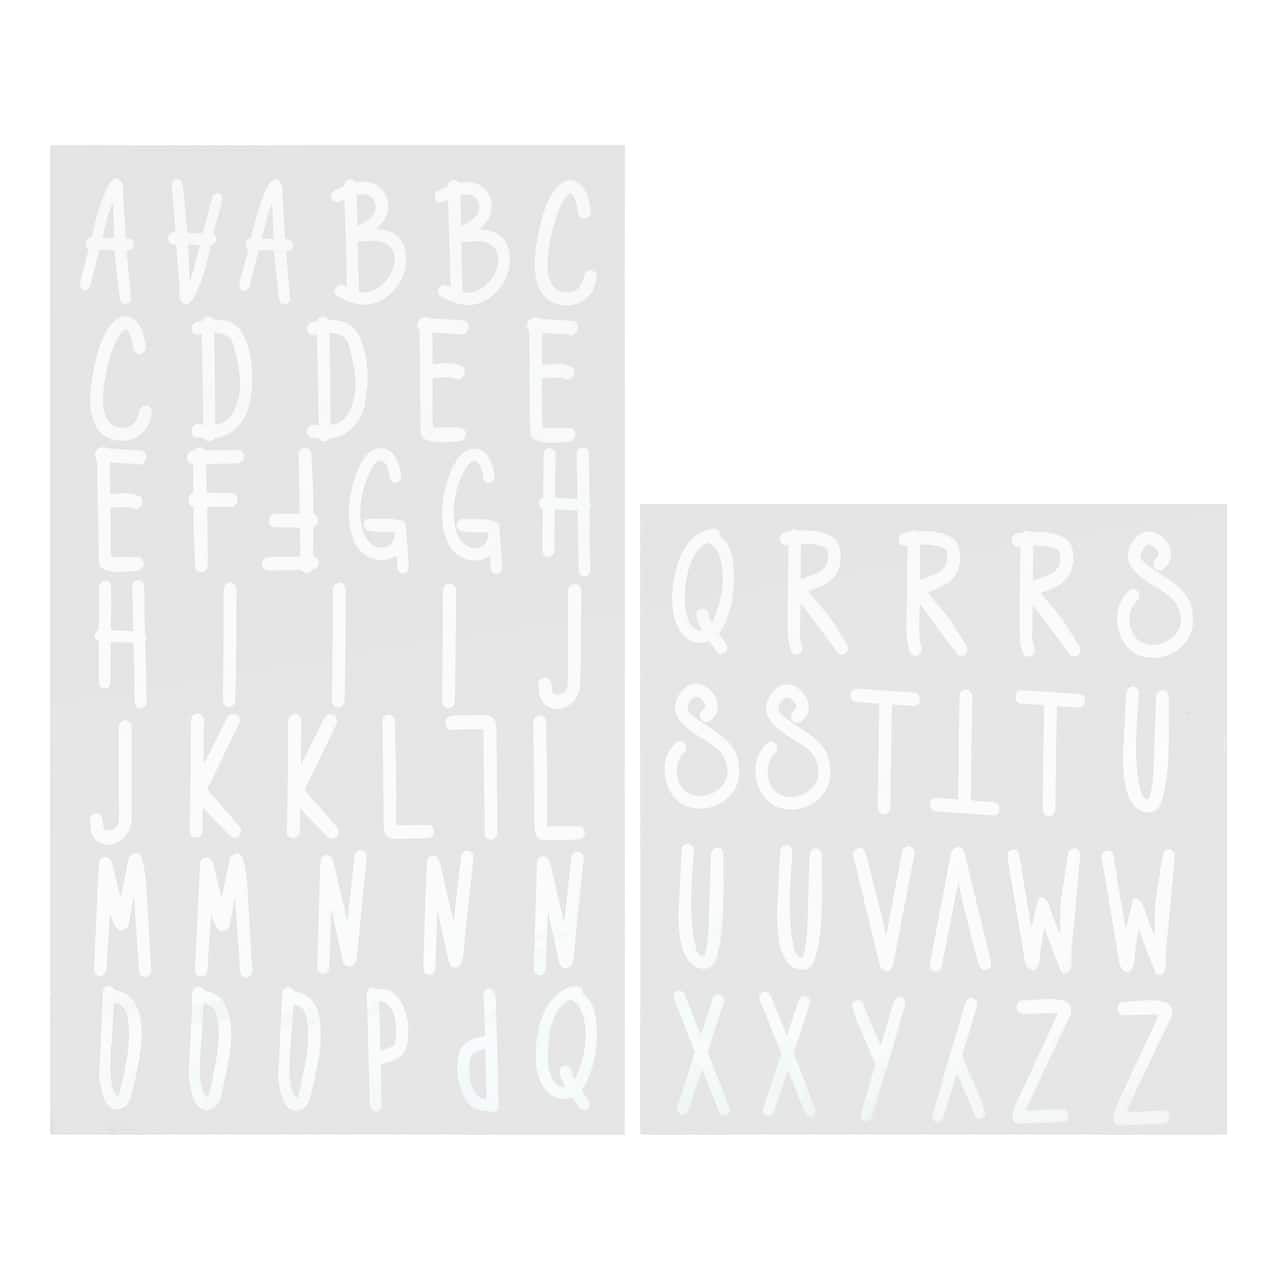 White Fun Font Alphabet Iron-On Transfers by Make Market®